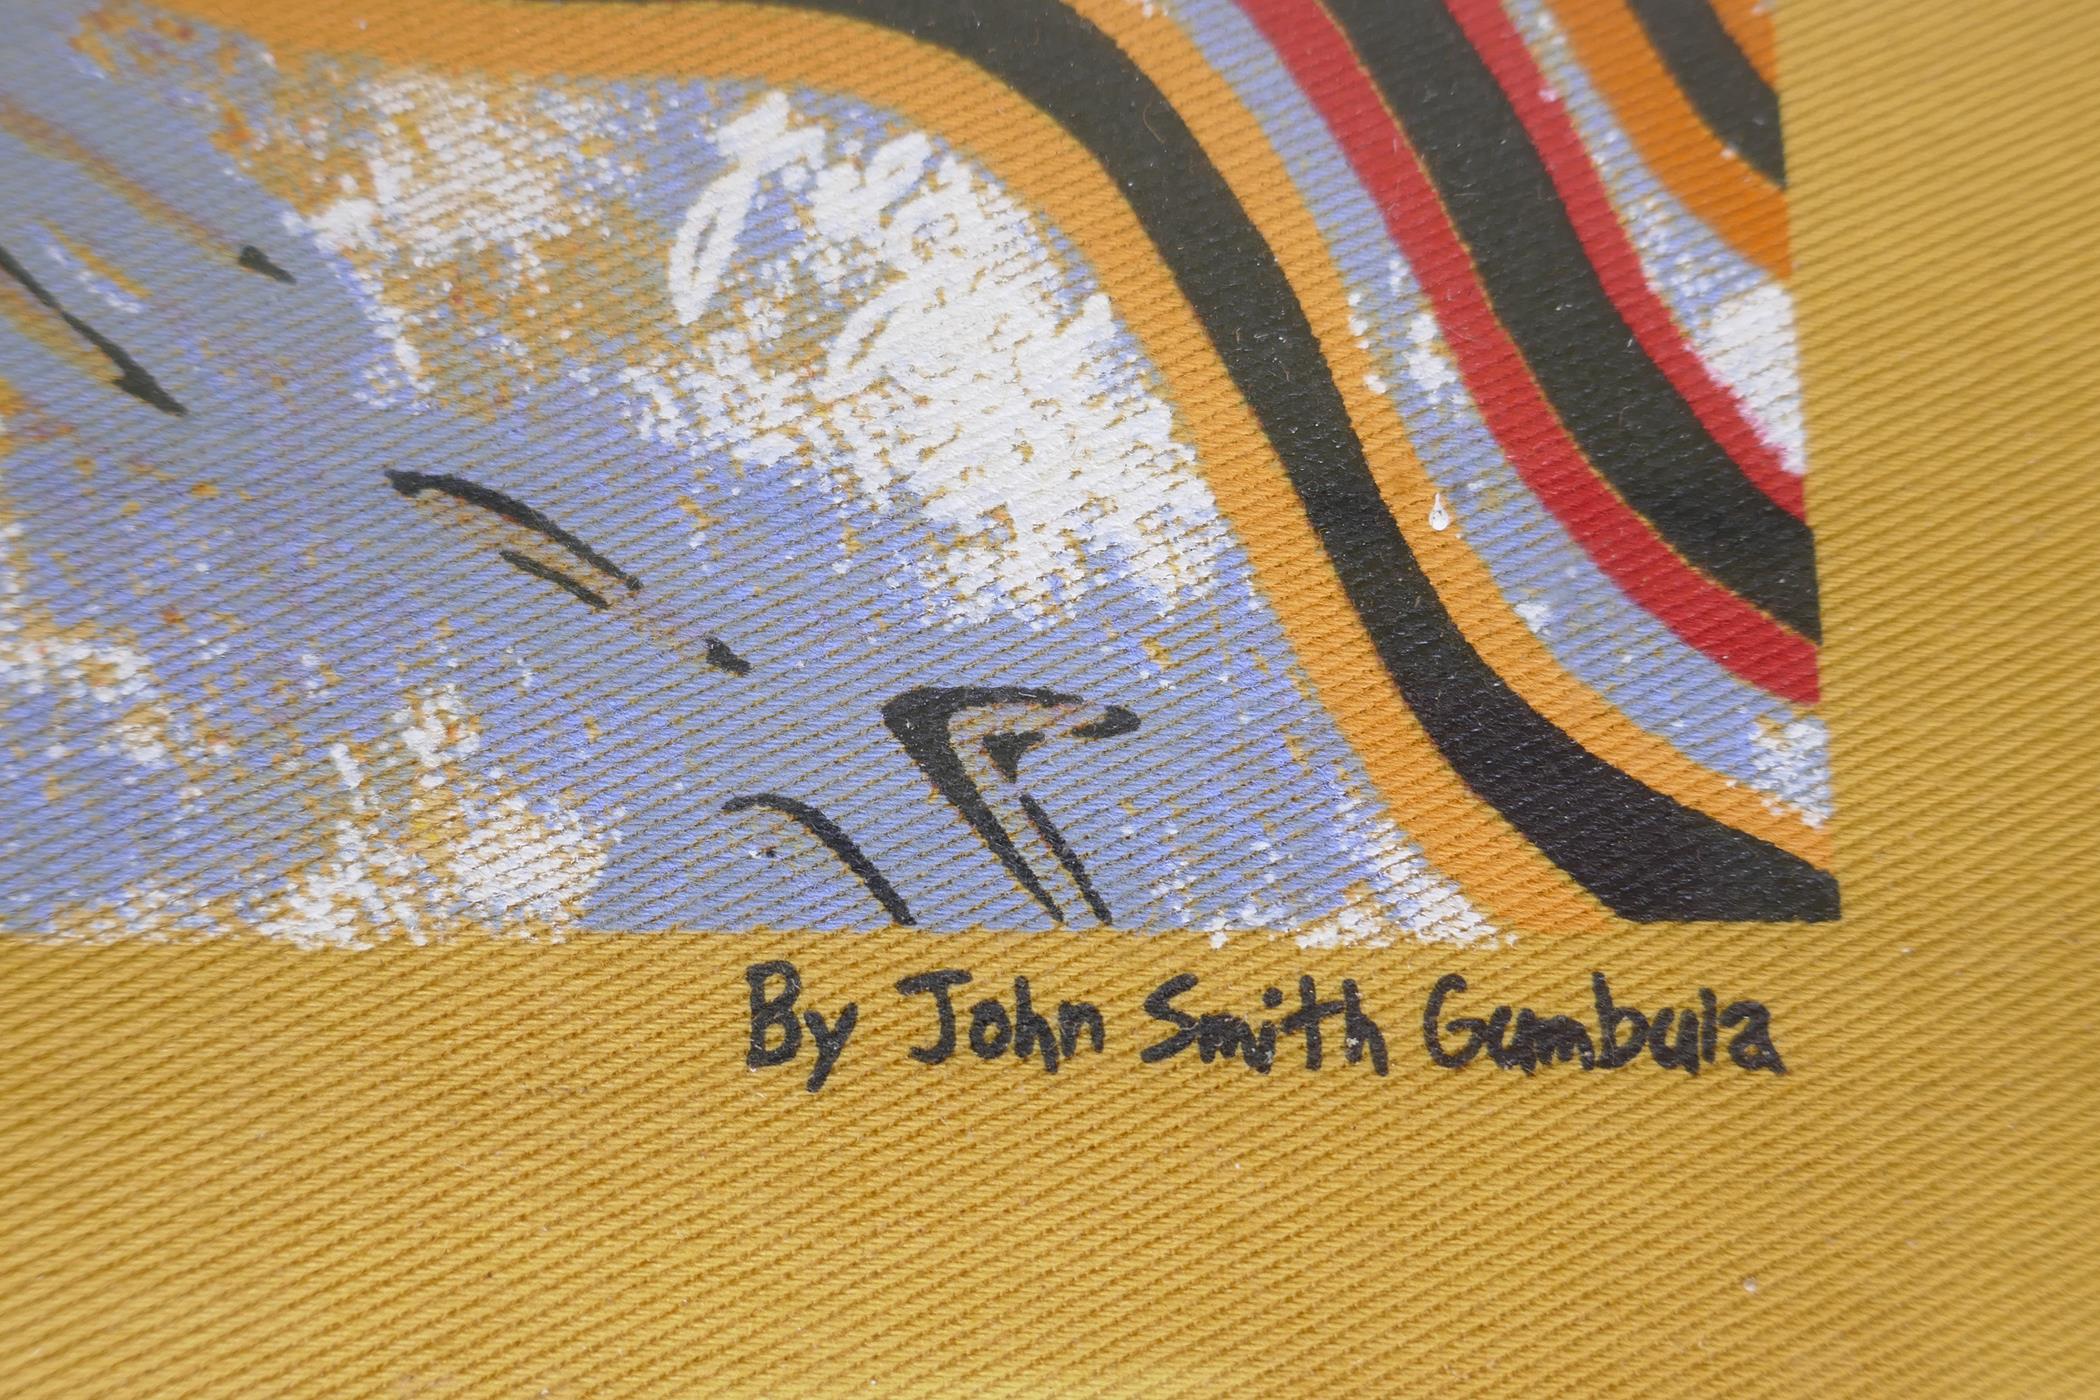 John Smith Gumbula, Australian aboriginal art, two women looking for bush food, signed print on - Image 4 of 4